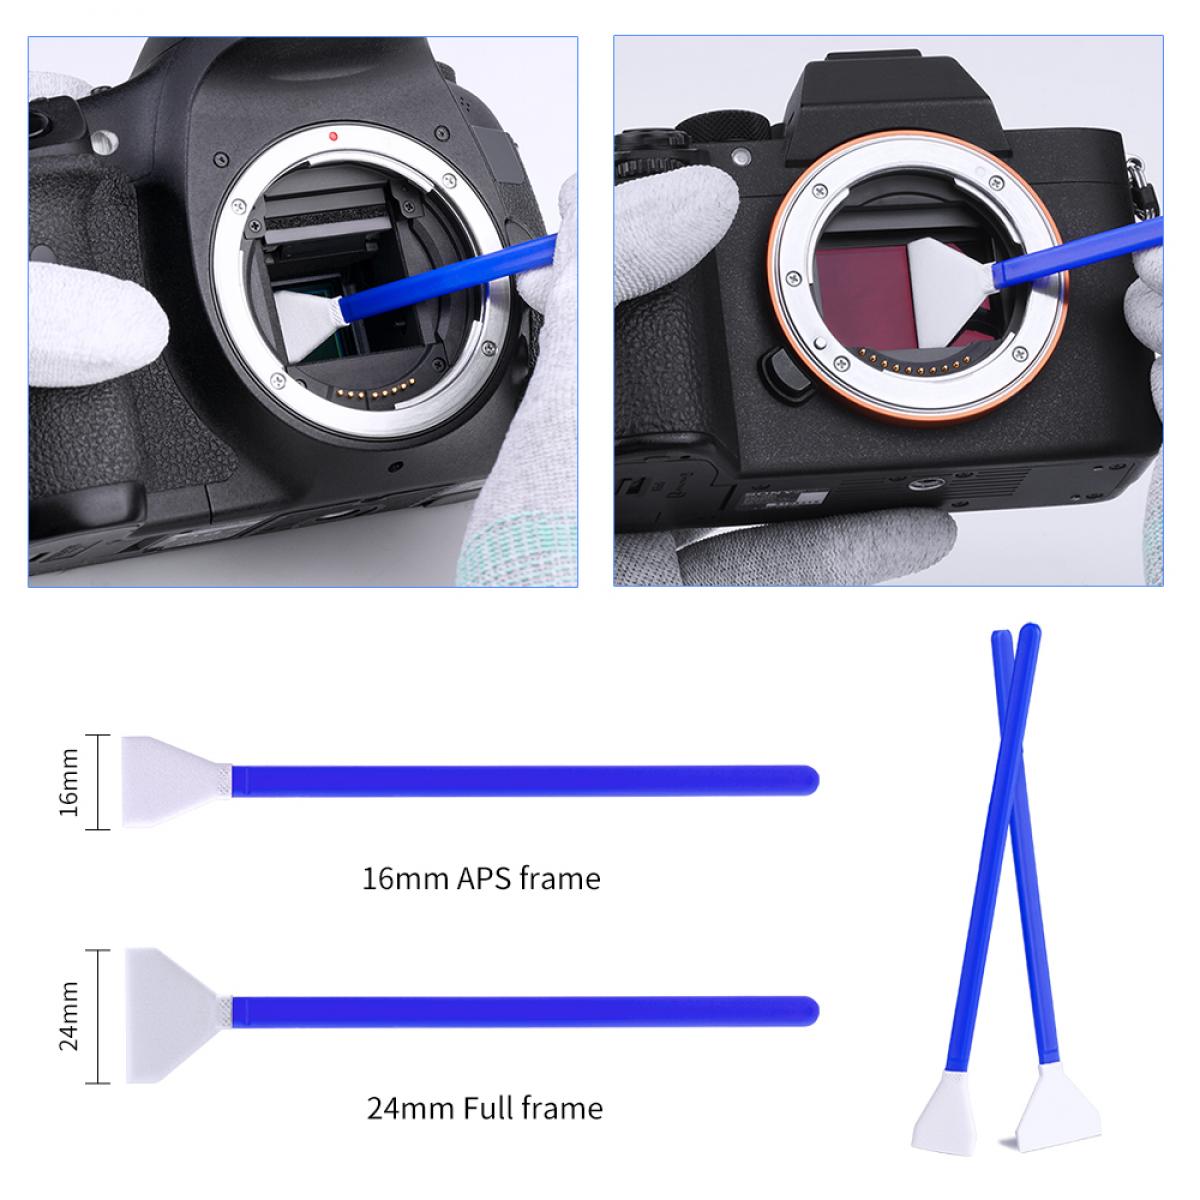 K&F Concept Professional Cleaning Kit for DSLR Cameras and Sensitive Electronics Bundle